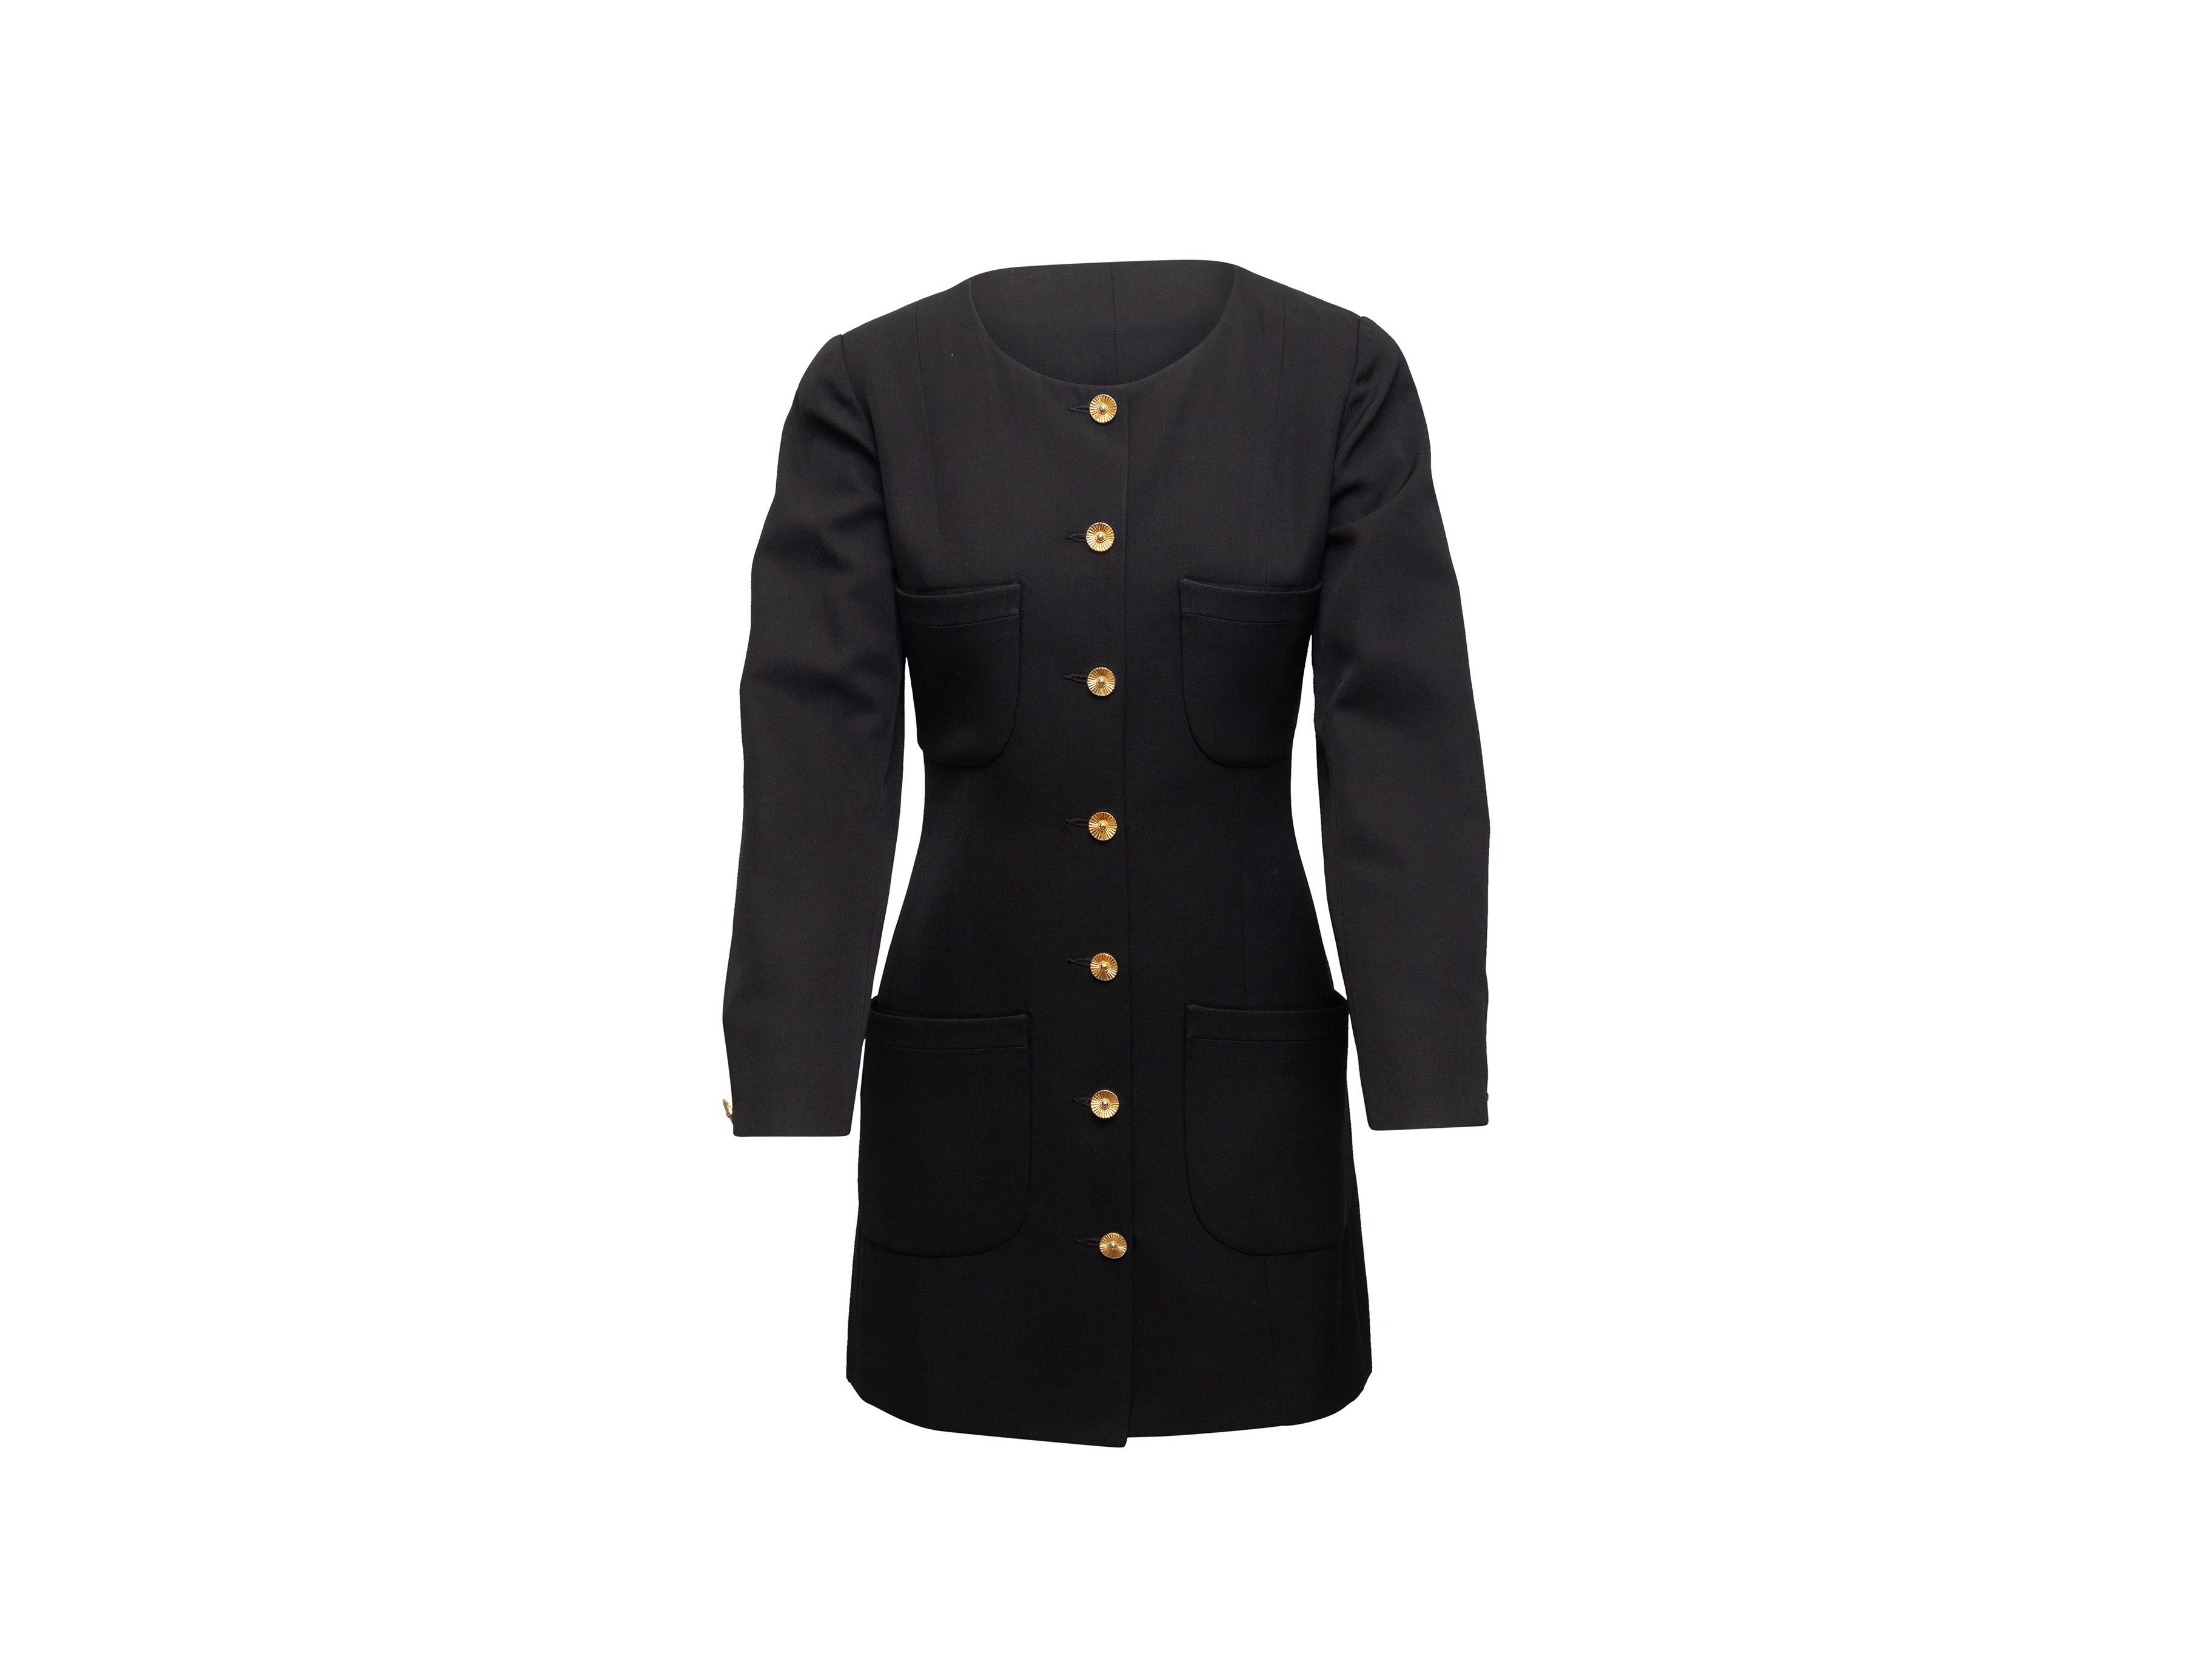 Product details: Vintage black longline wool blazer by Chanel Boutique. Crew neckline. Four patch pockets. Gold-tone button closures at front. 30